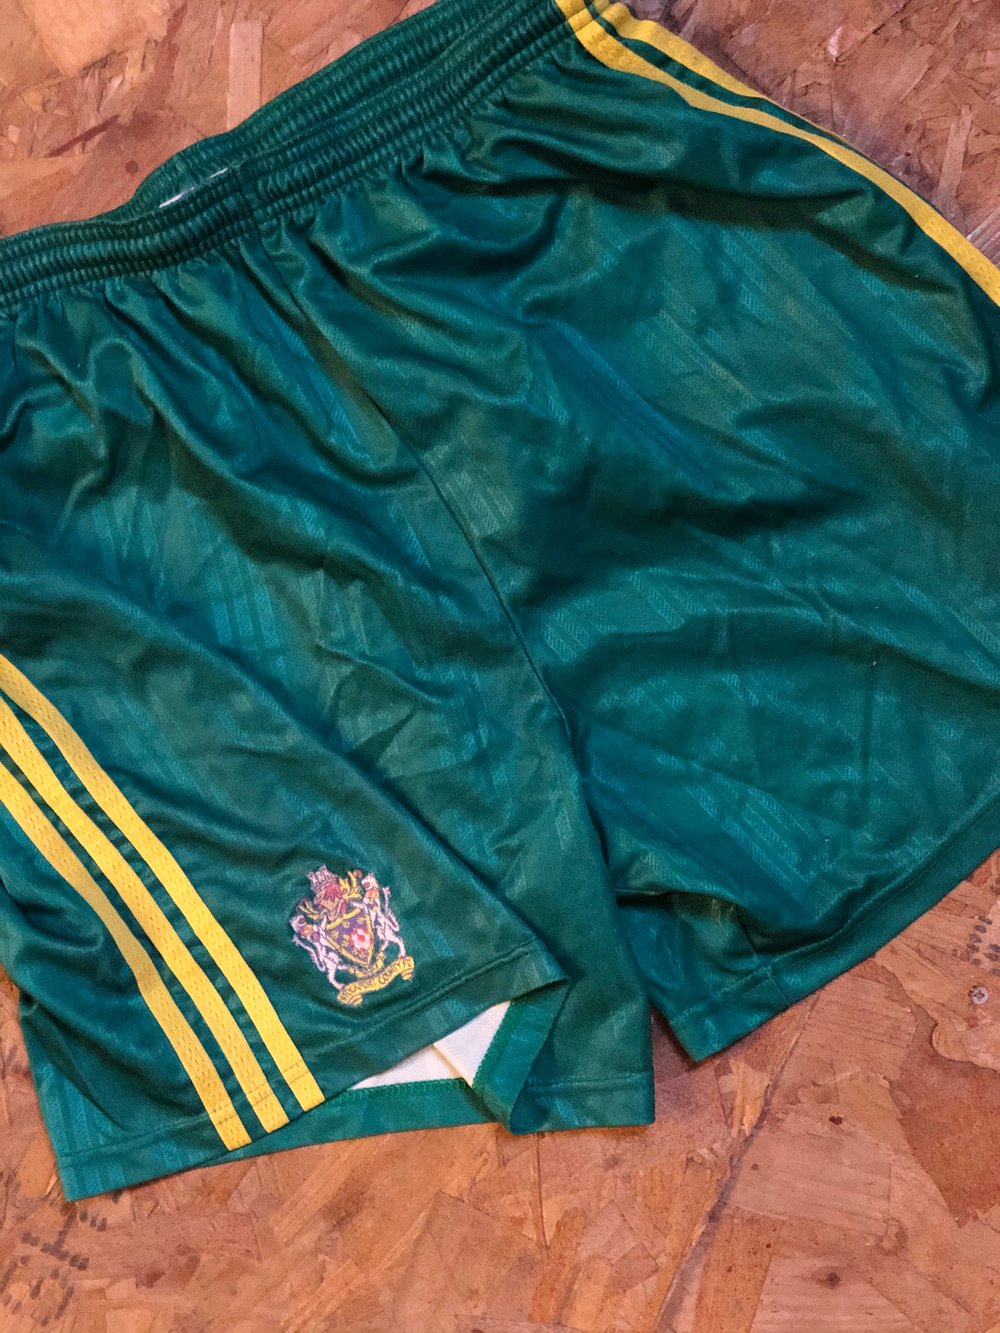 Replica 1998/99 adidas Away Shorts